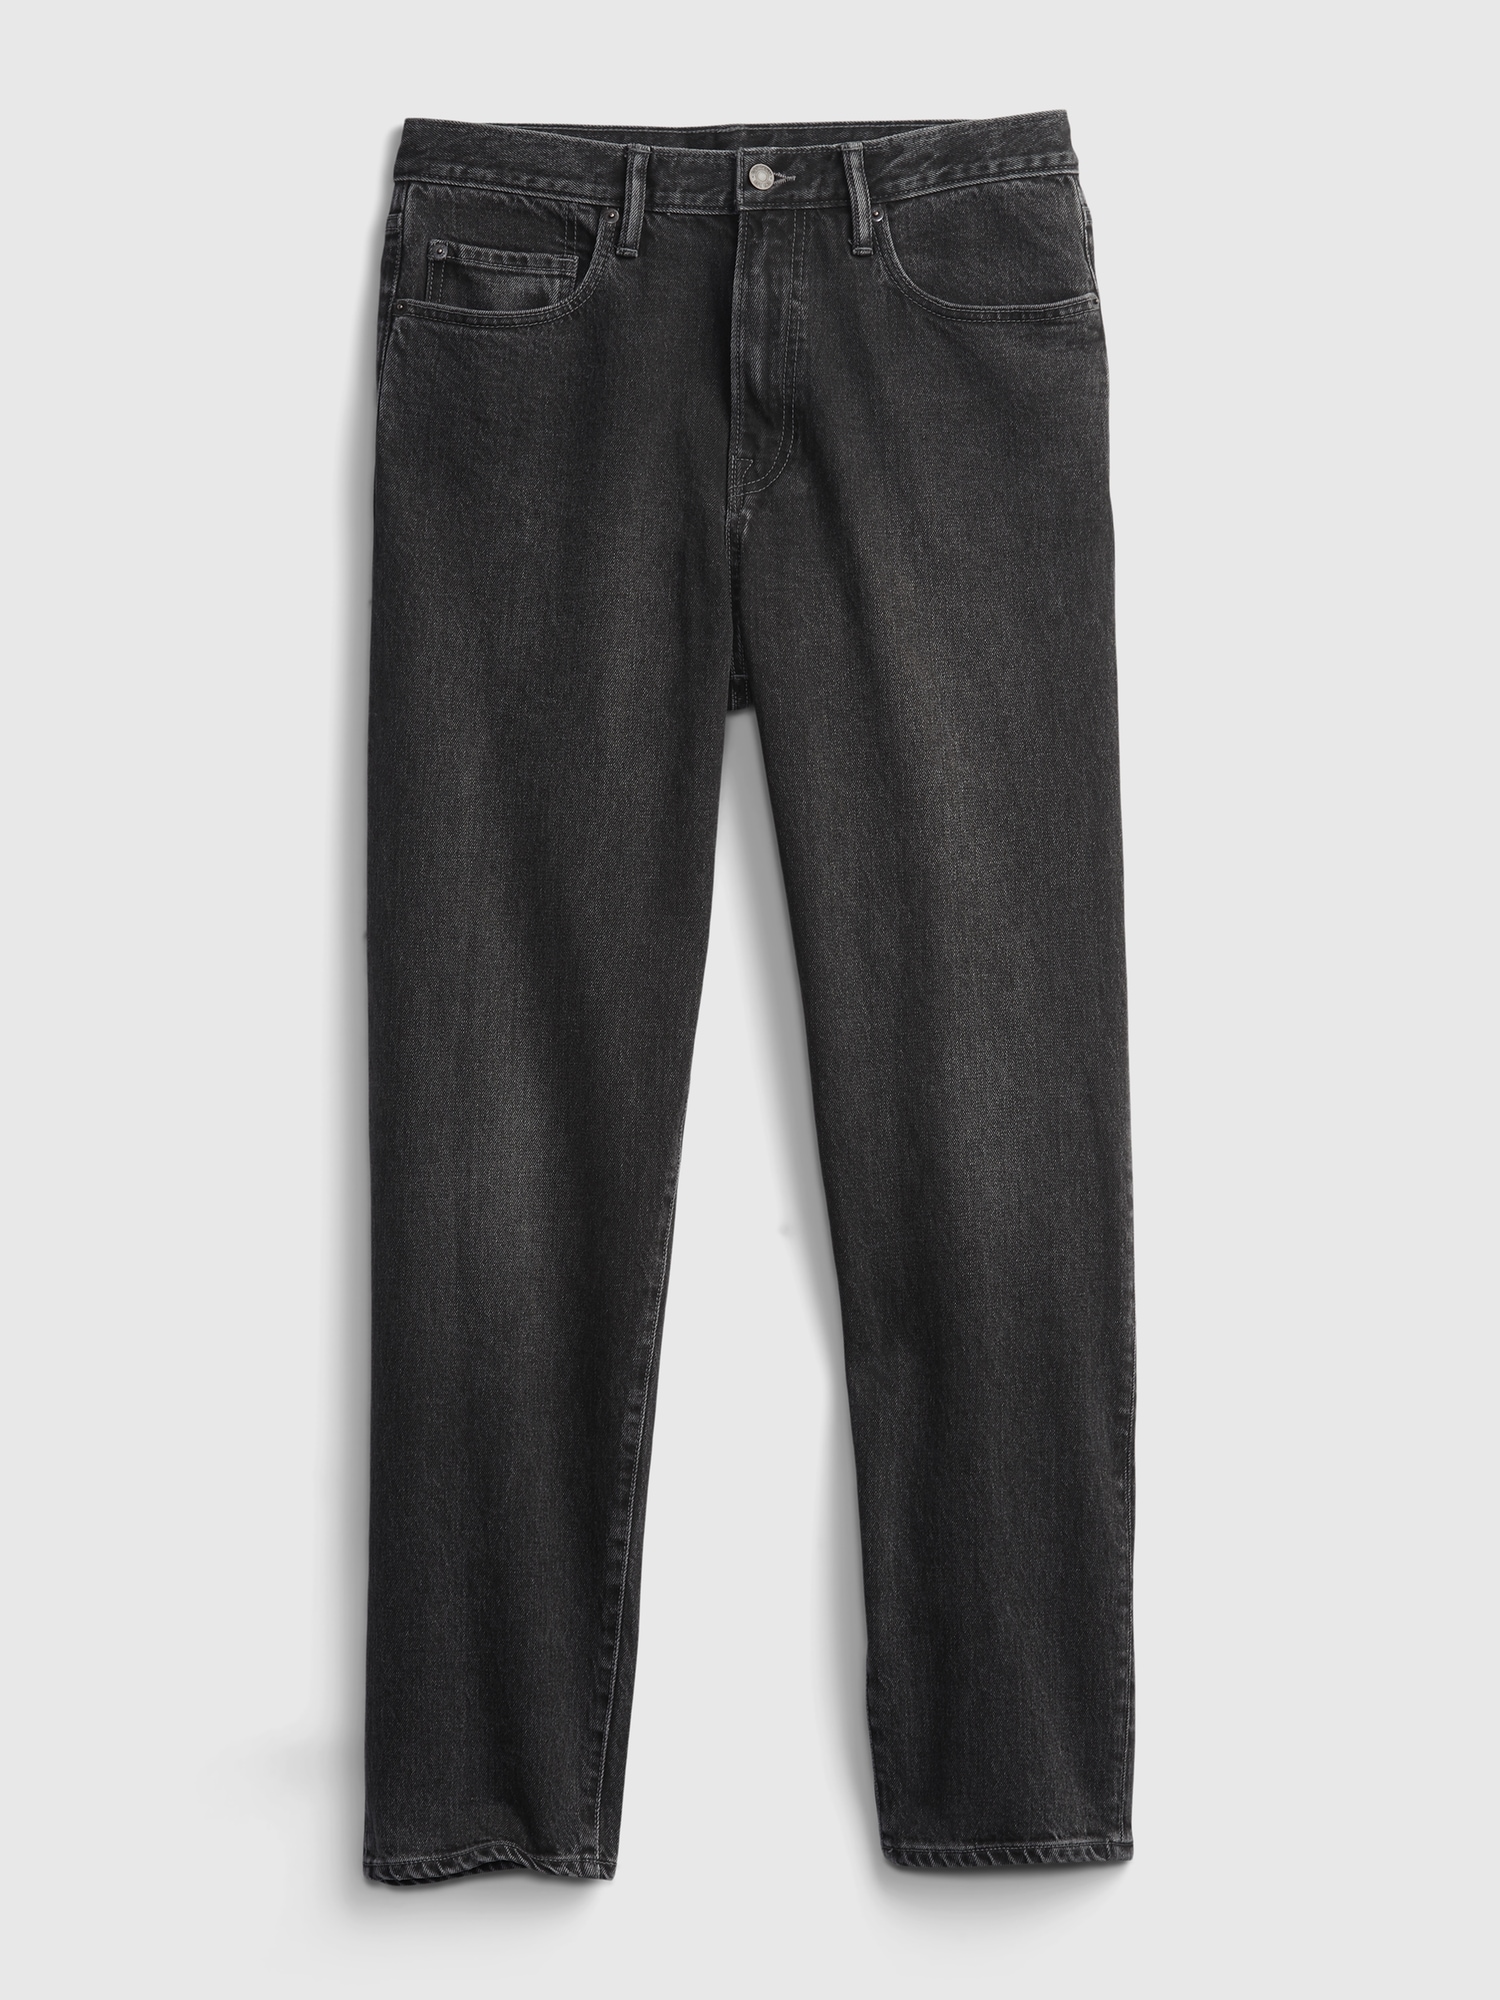 NWT Mens GAP Relaxed Taper GapFlex Denim Pants Jeans Choose Size Worn  Medium